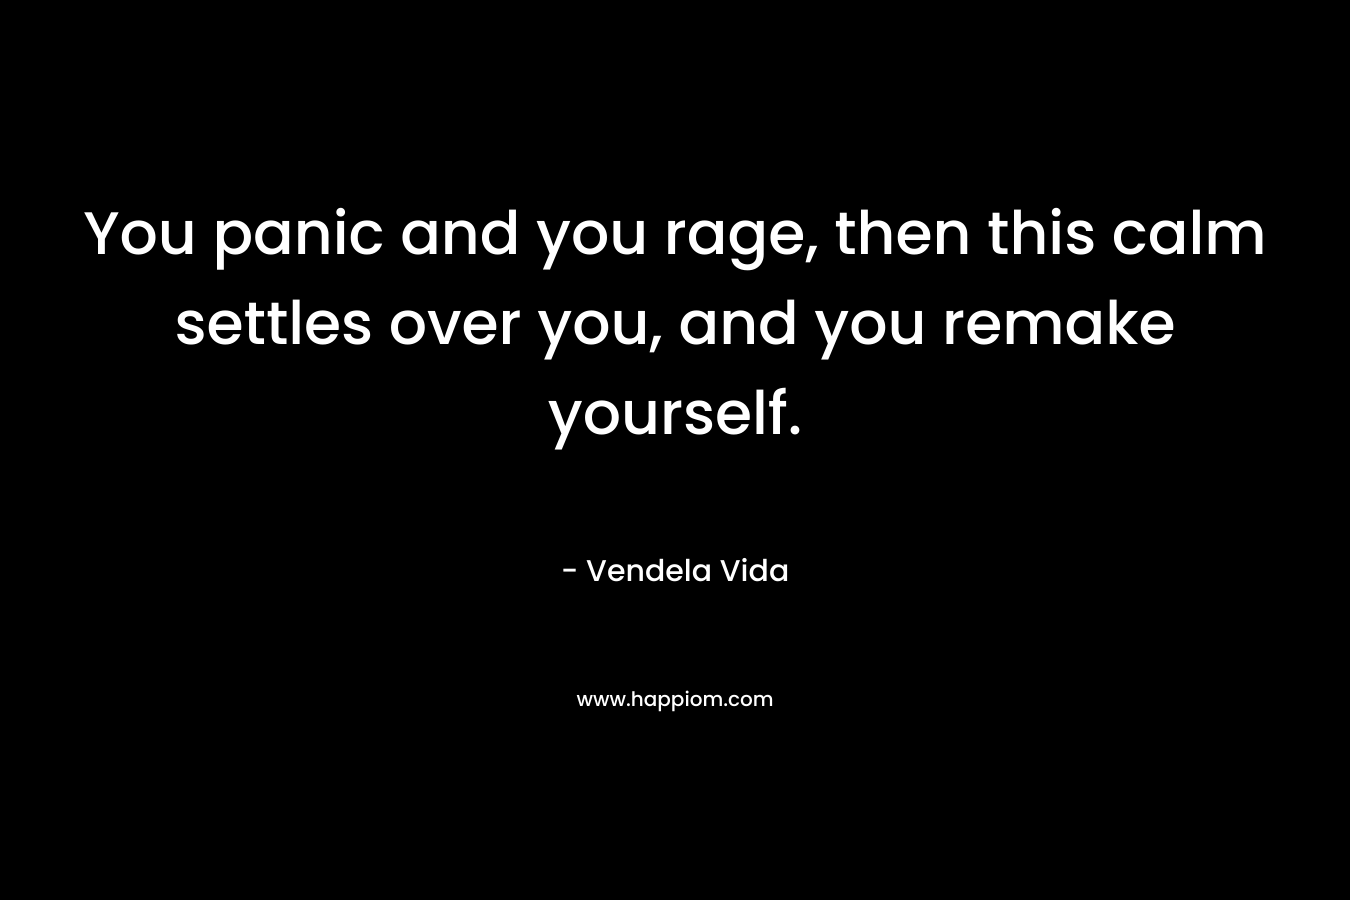 You panic and you rage, then this calm settles over you, and you remake yourself. – Vendela Vida